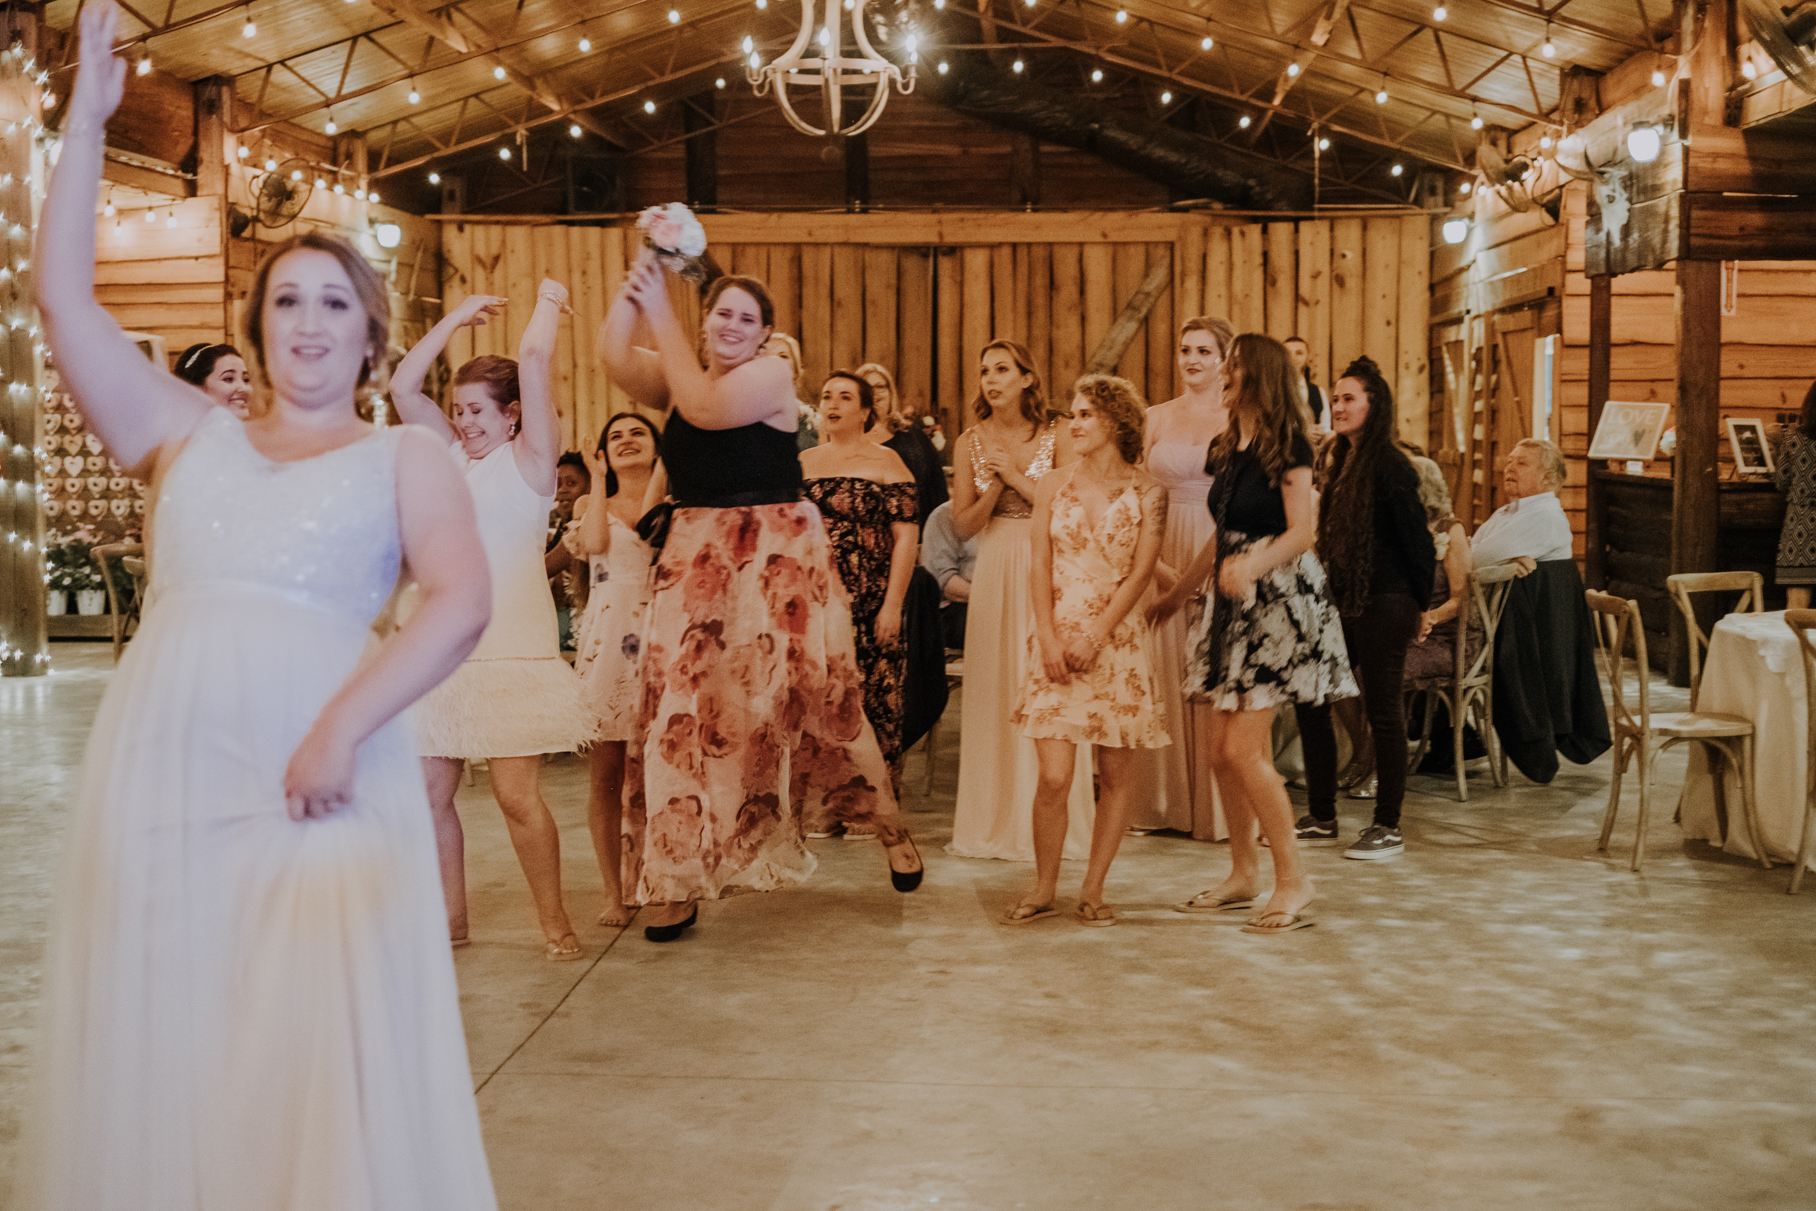 katie + chris | florida rustic barn wedding | plant city wedding | tampa wedding photographer